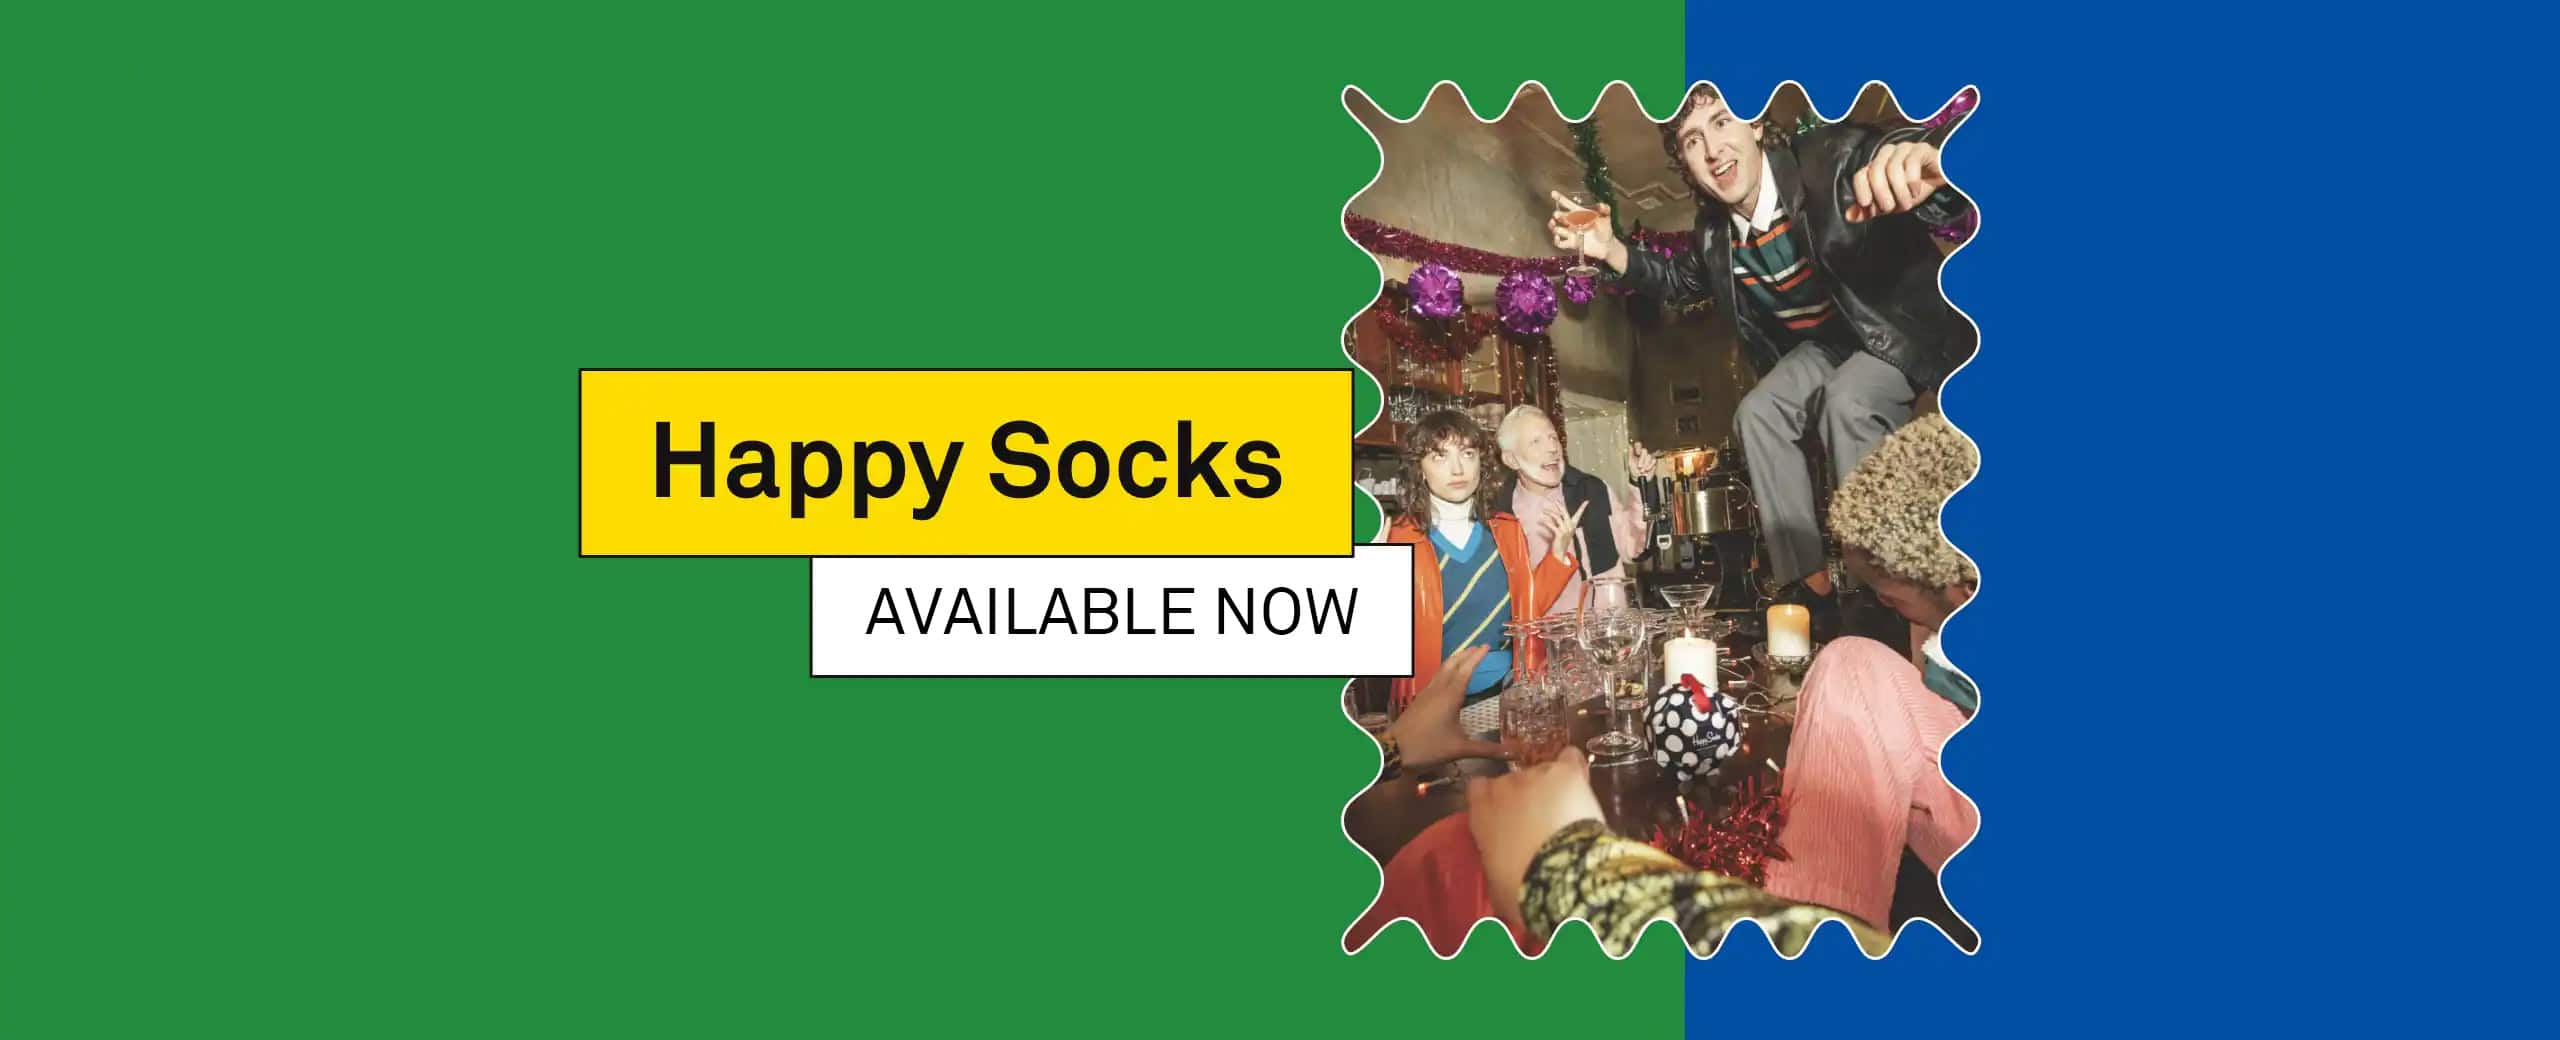 "Happy Socksのウェブ販売開始"